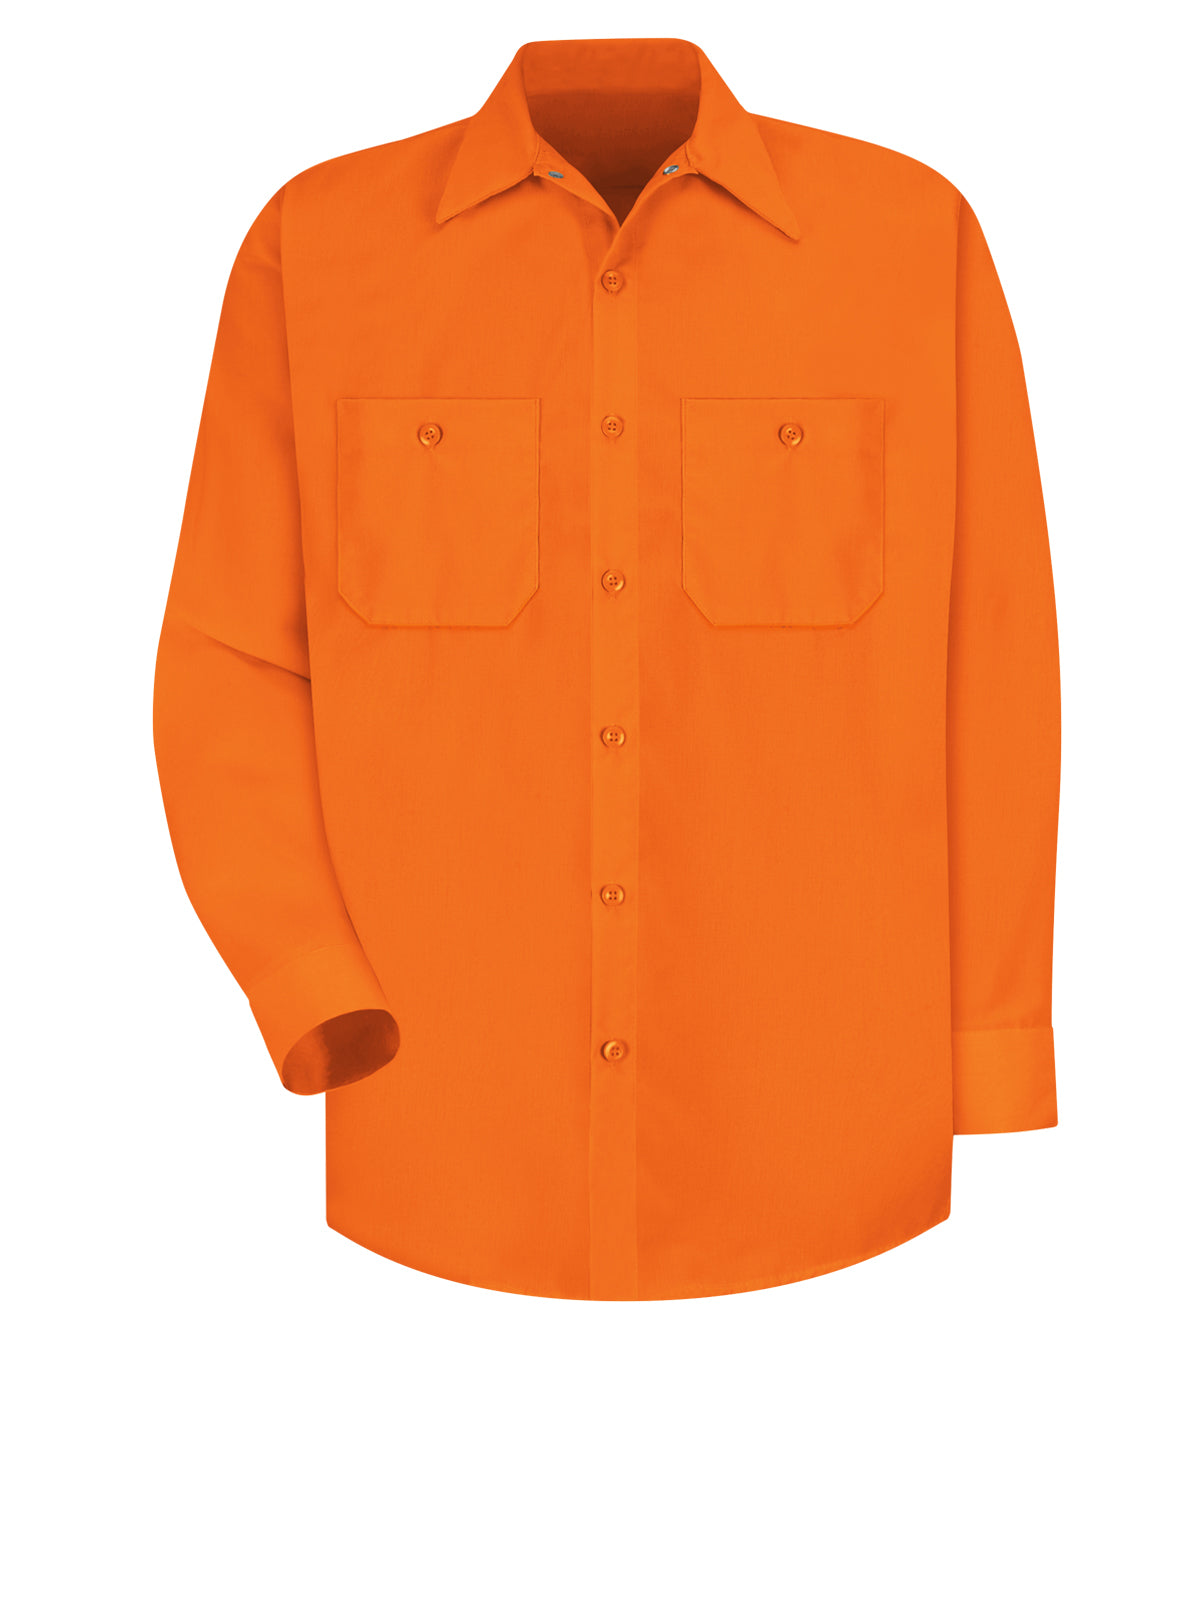 Hi-Visibility Long Sleeve Work Shirt - SS14 - Orange